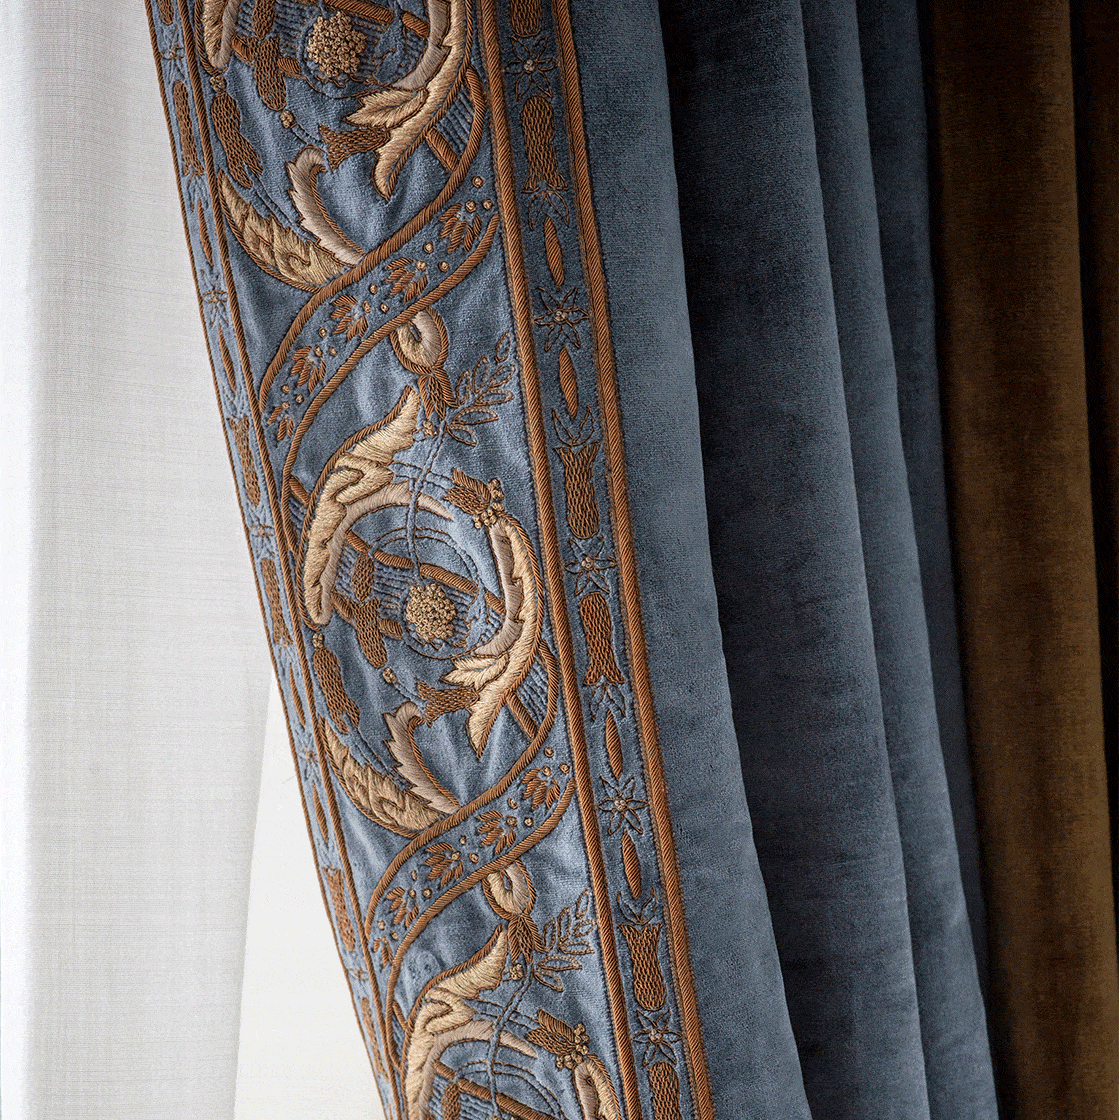 Racine embroidery on drapes in Capri Silk velvet - Nankin - Beaumont & Fletcher